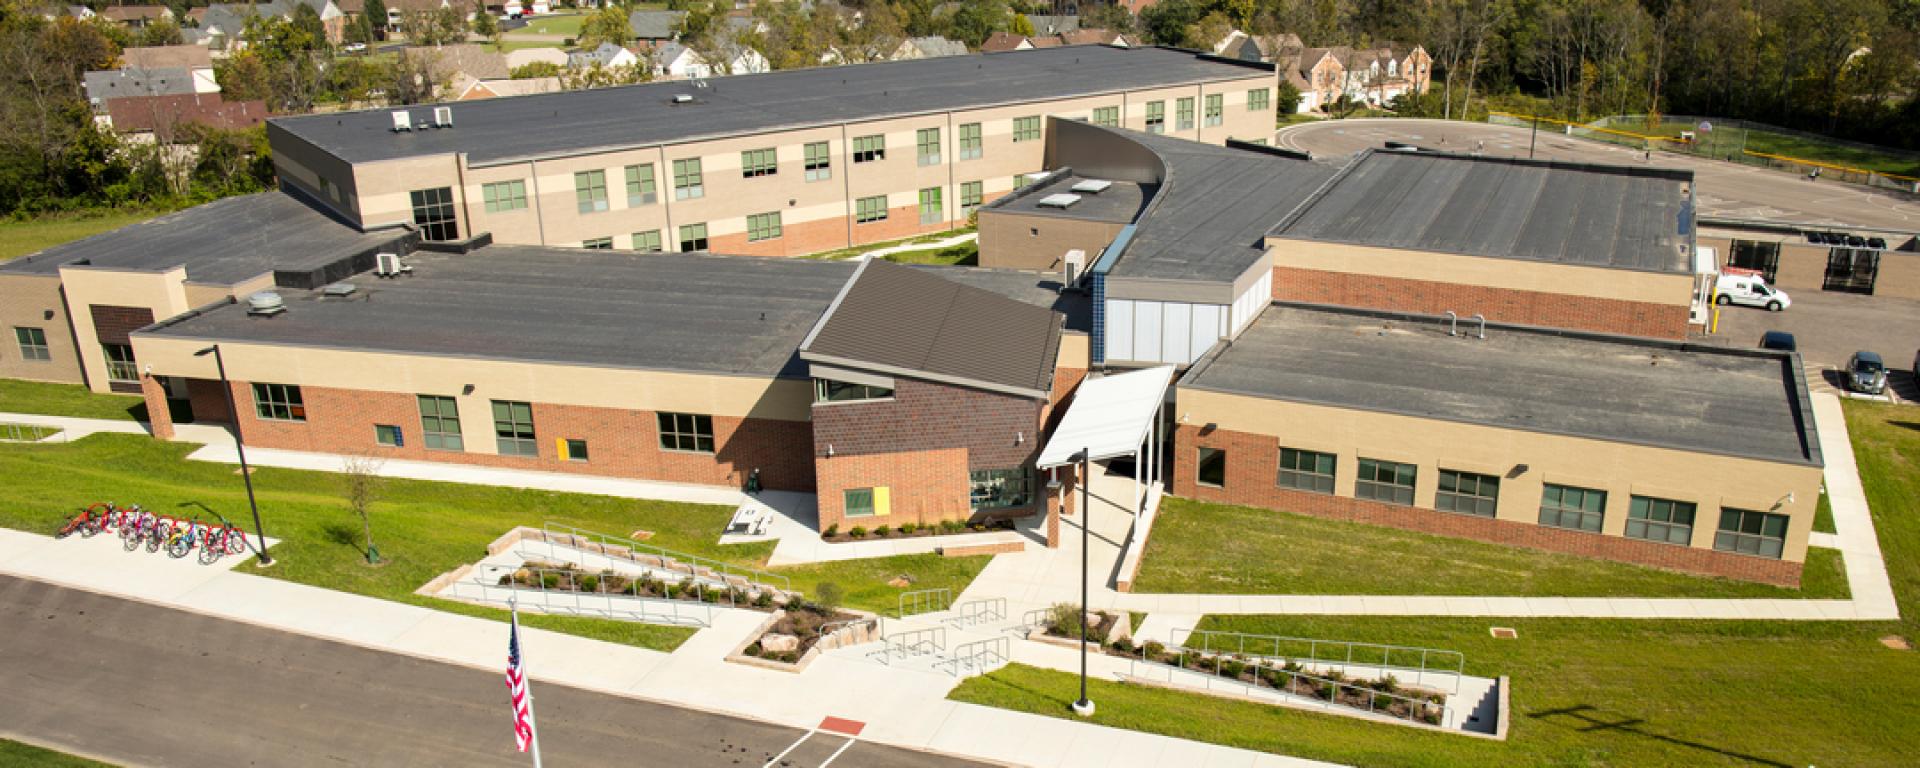 aerial view of elementary school